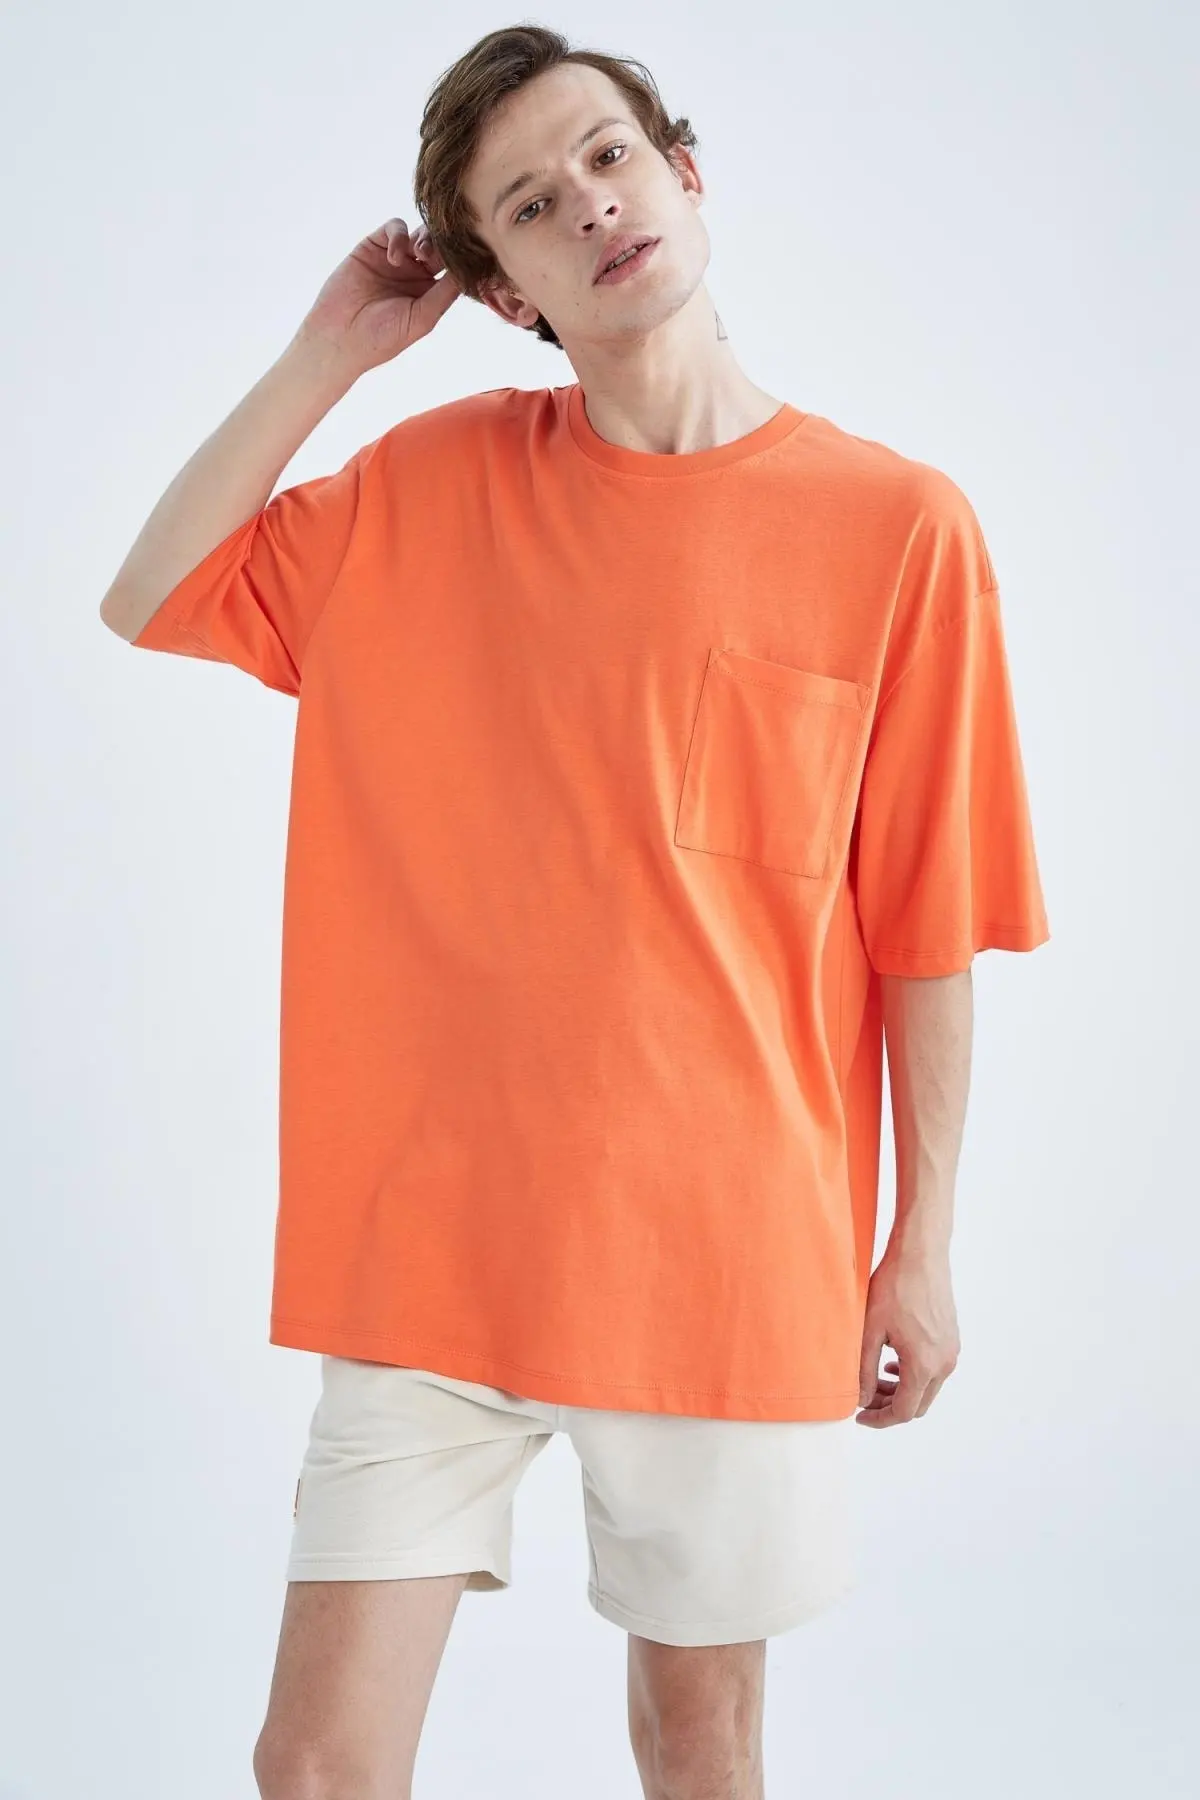 تیشرت اور سایز تک جیب مردانه نارنجی برند Defacto 